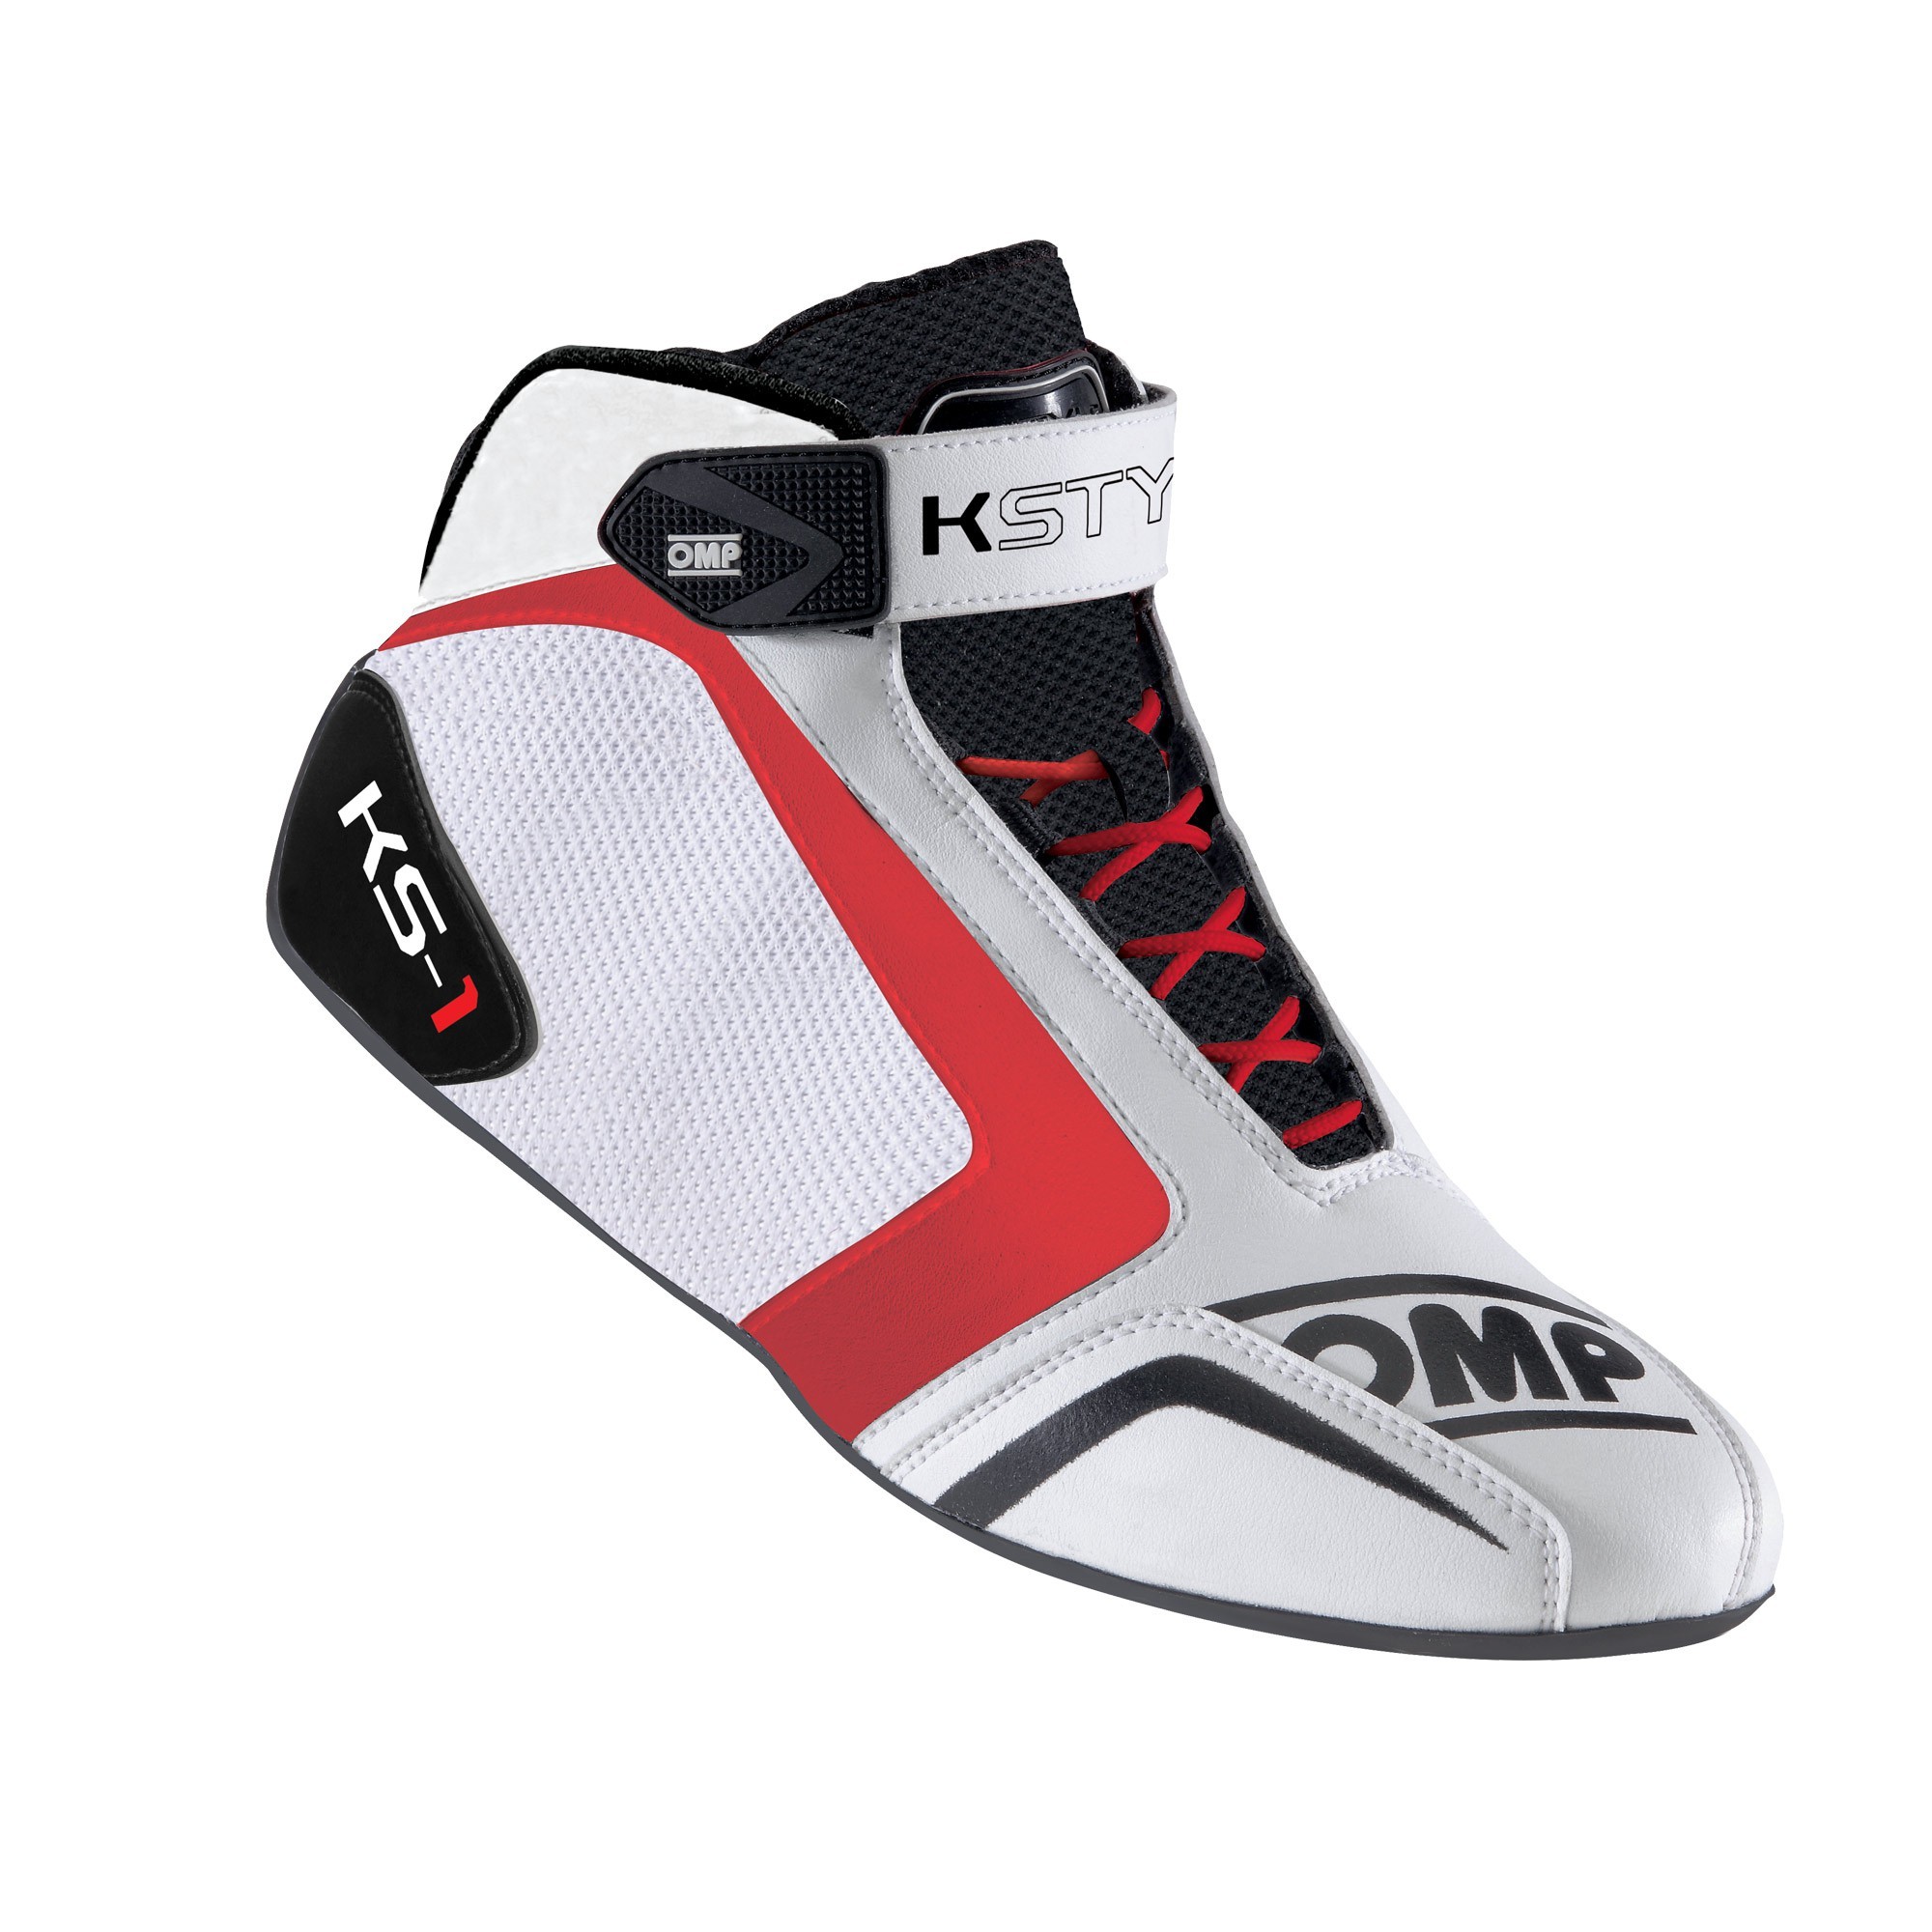 KS-1 - Karting shoes | Racing